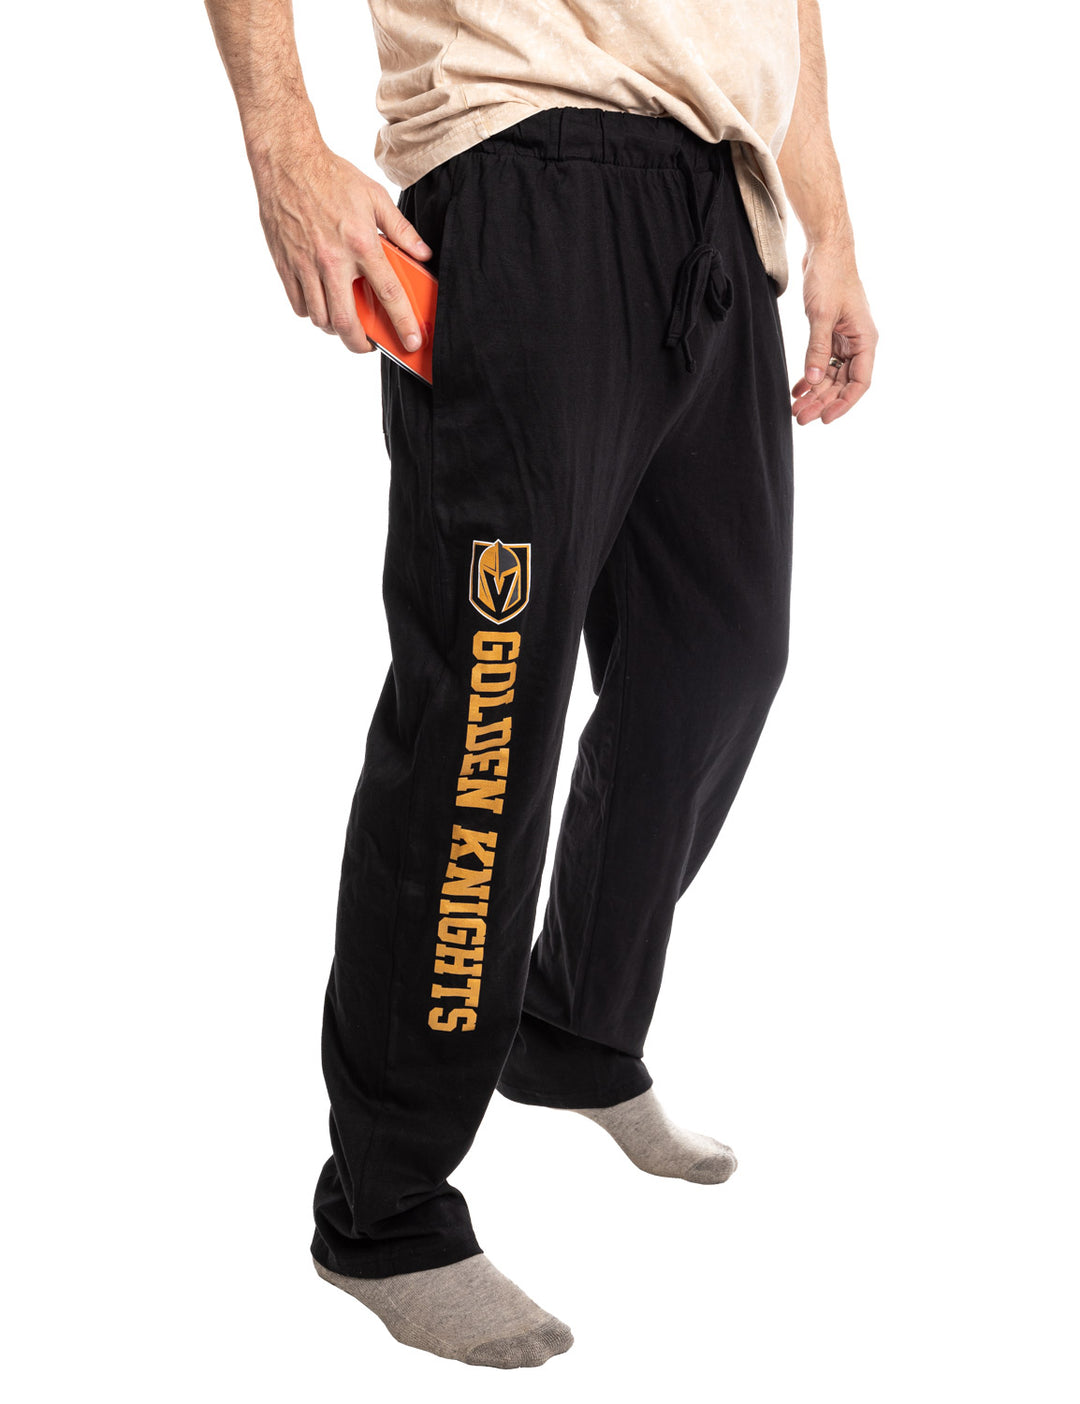 Vegas Golden Knights Men's Cotton Jersey Pants